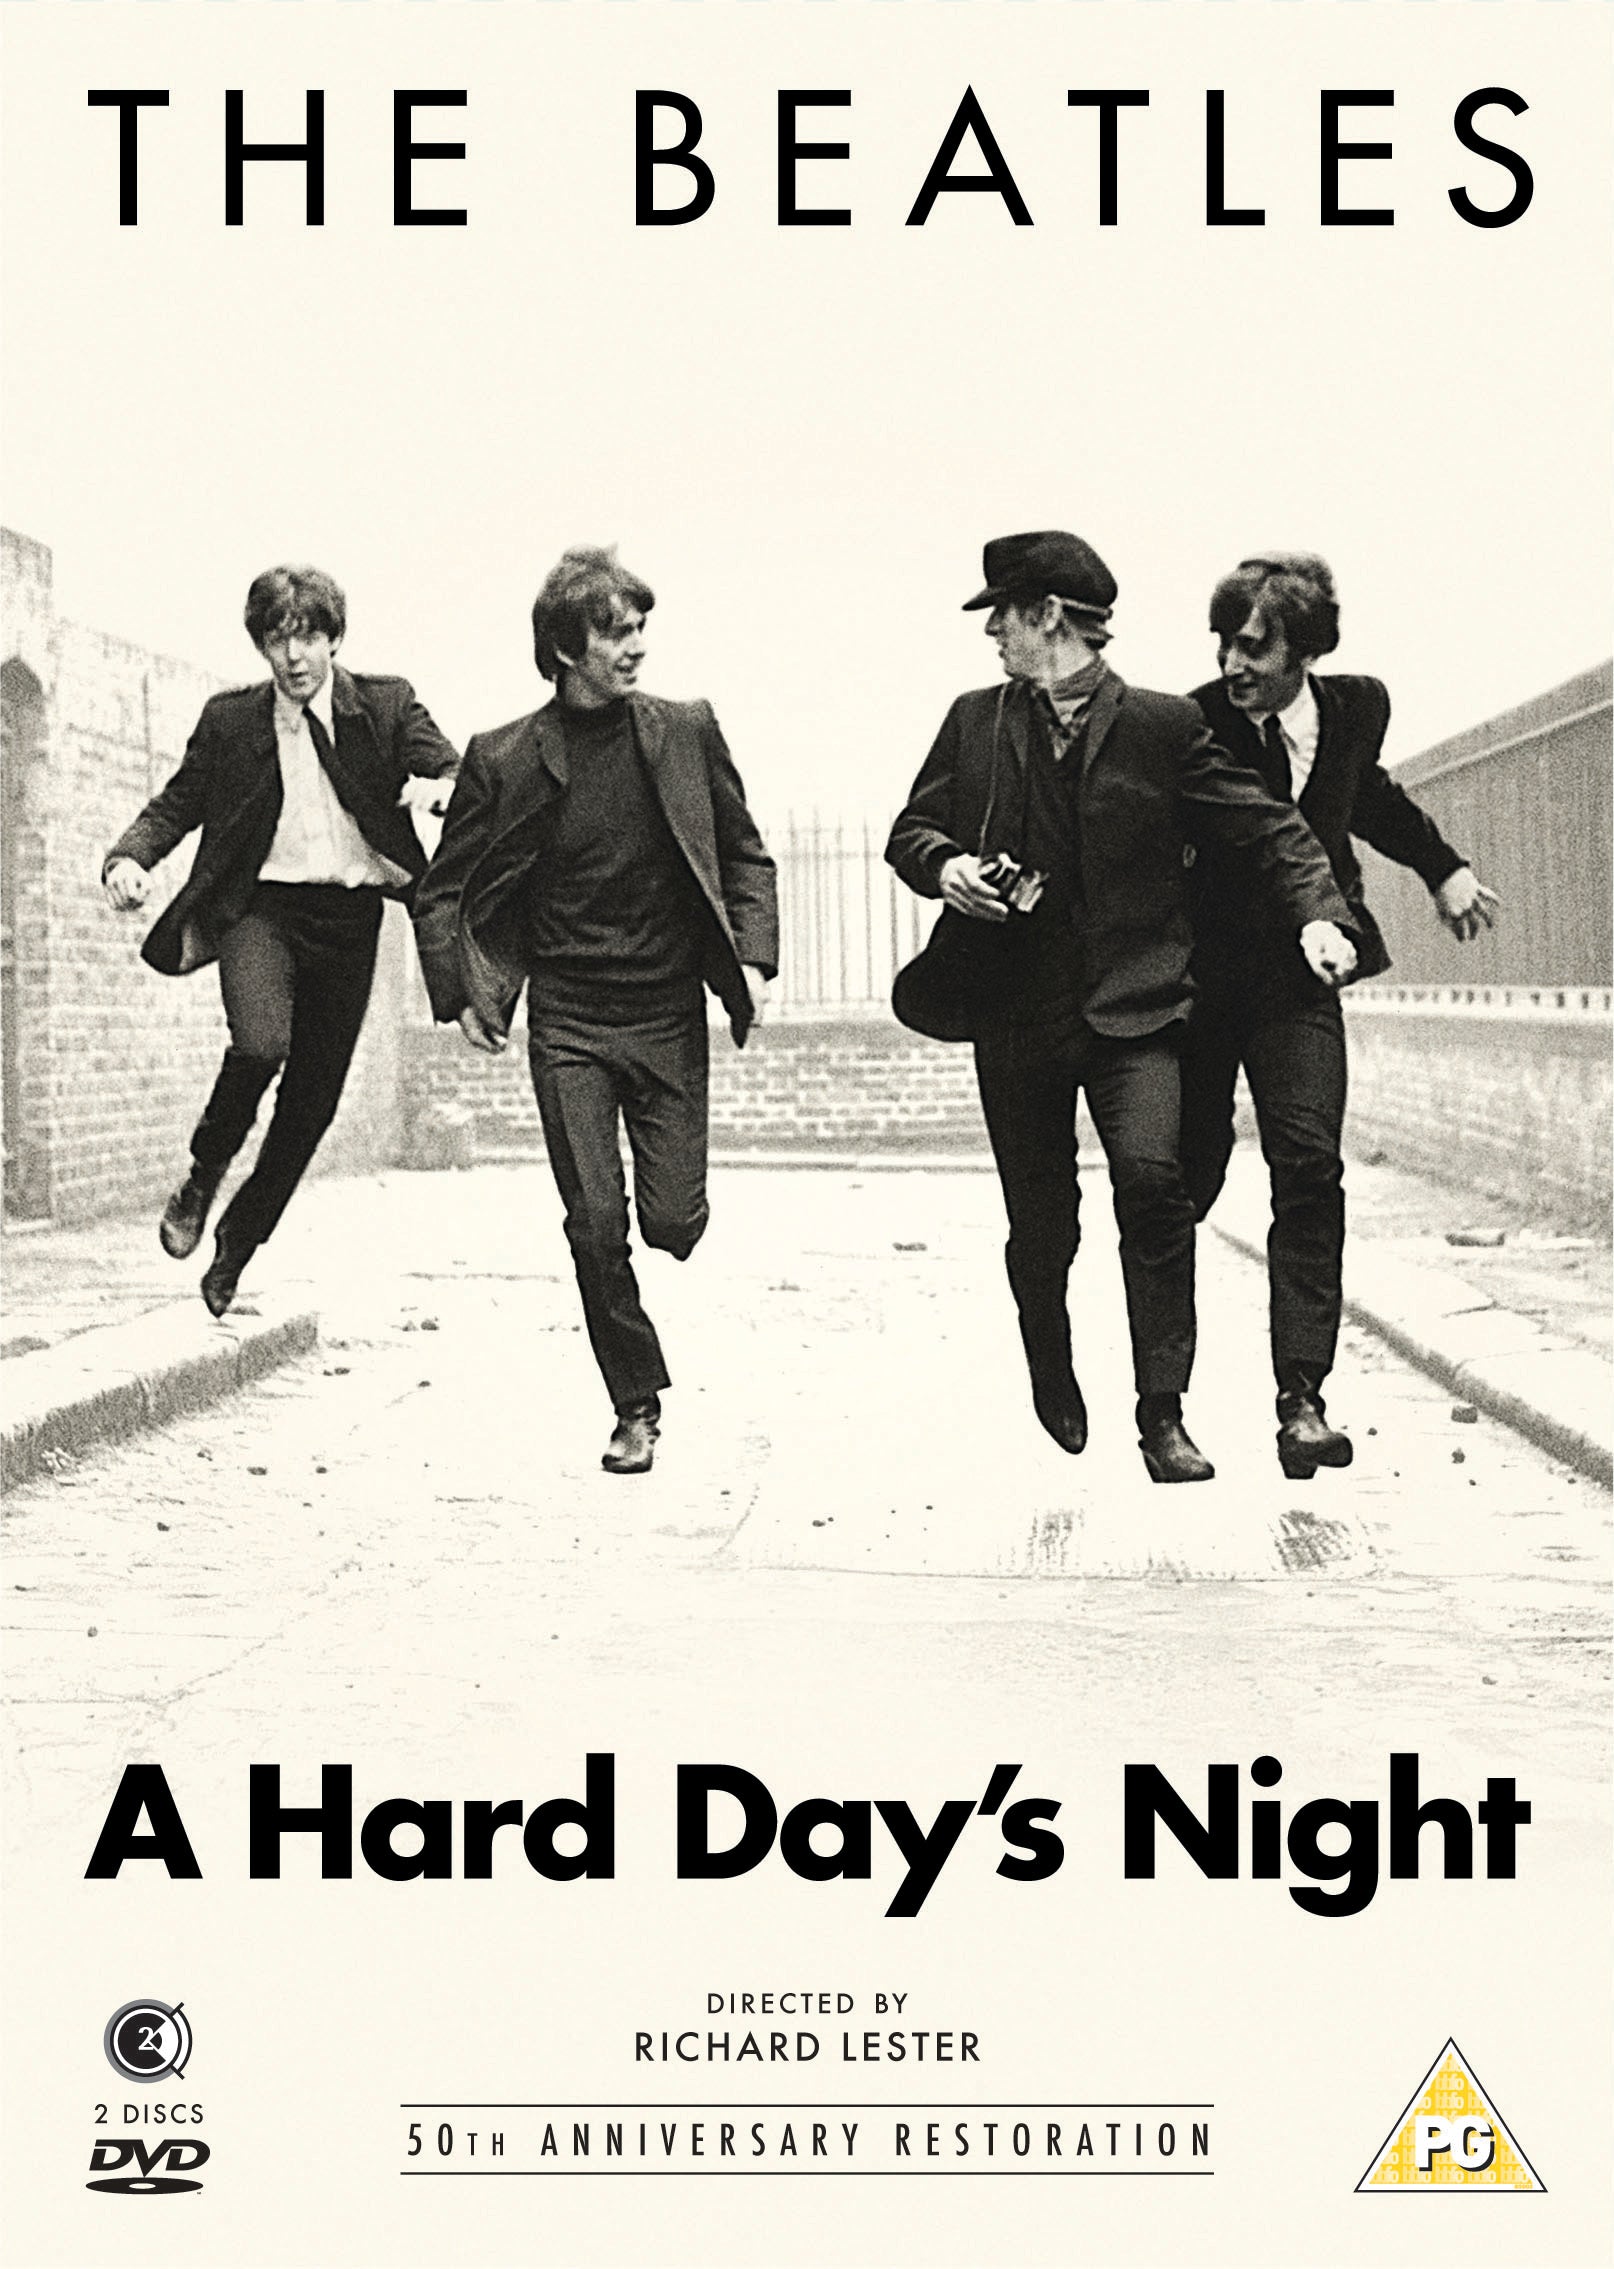 The beatles a hard day s night. The Beatles a hard Day's Night 1964. Beatles "hard Days Night". Битлз - вечер трудного дня. Постер Beatles.